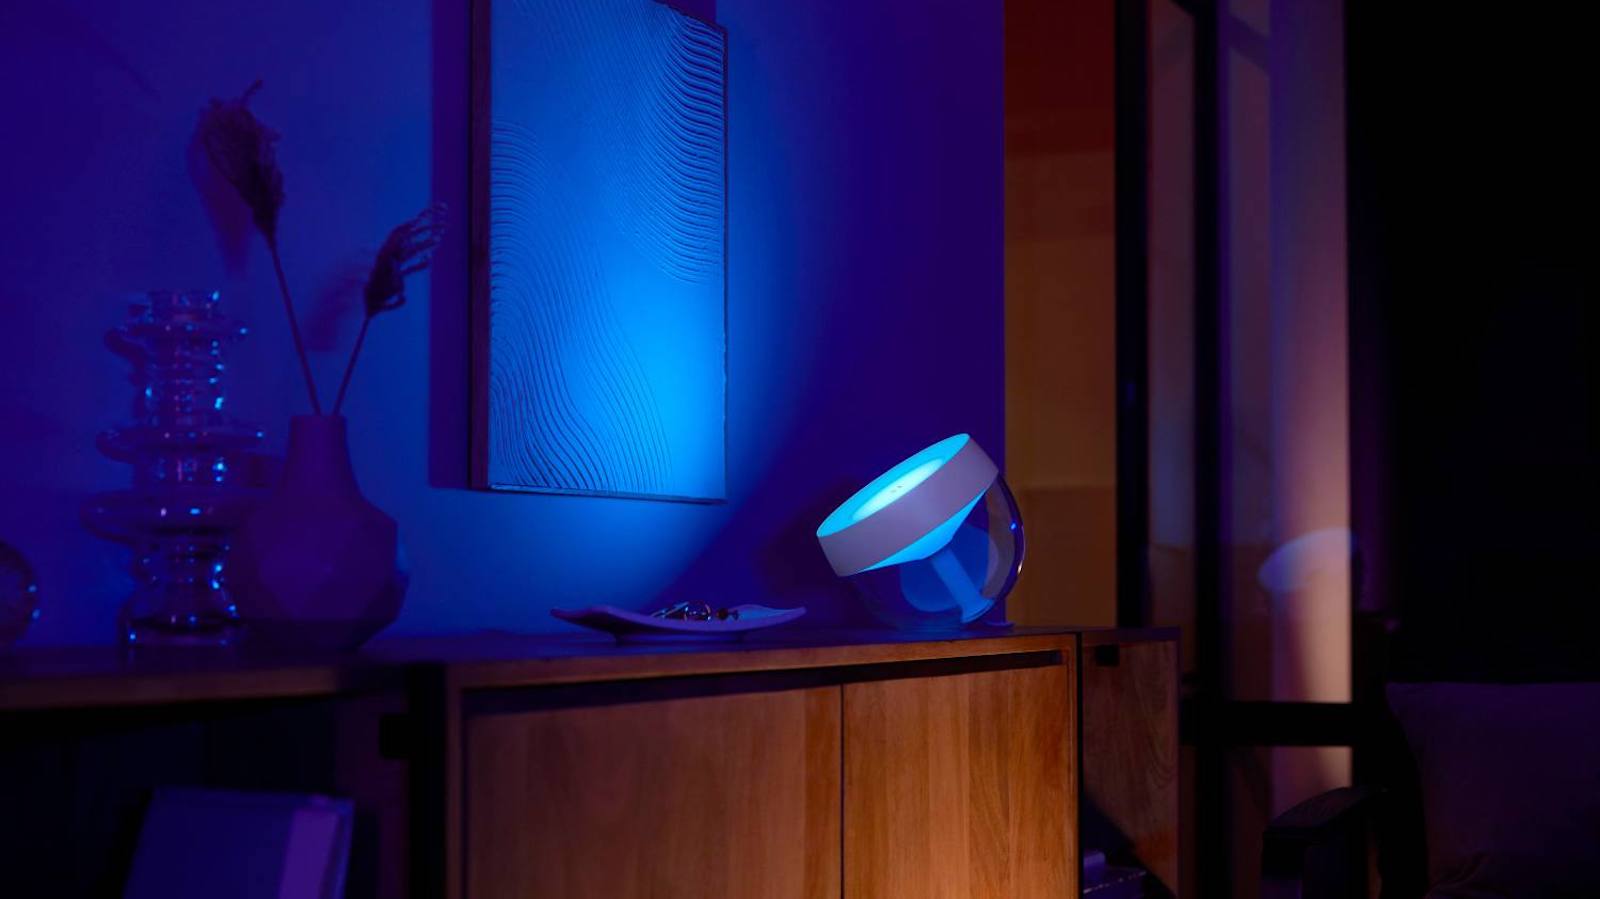 Iris lamp provides rich, ambient lighting » Gadget Flow